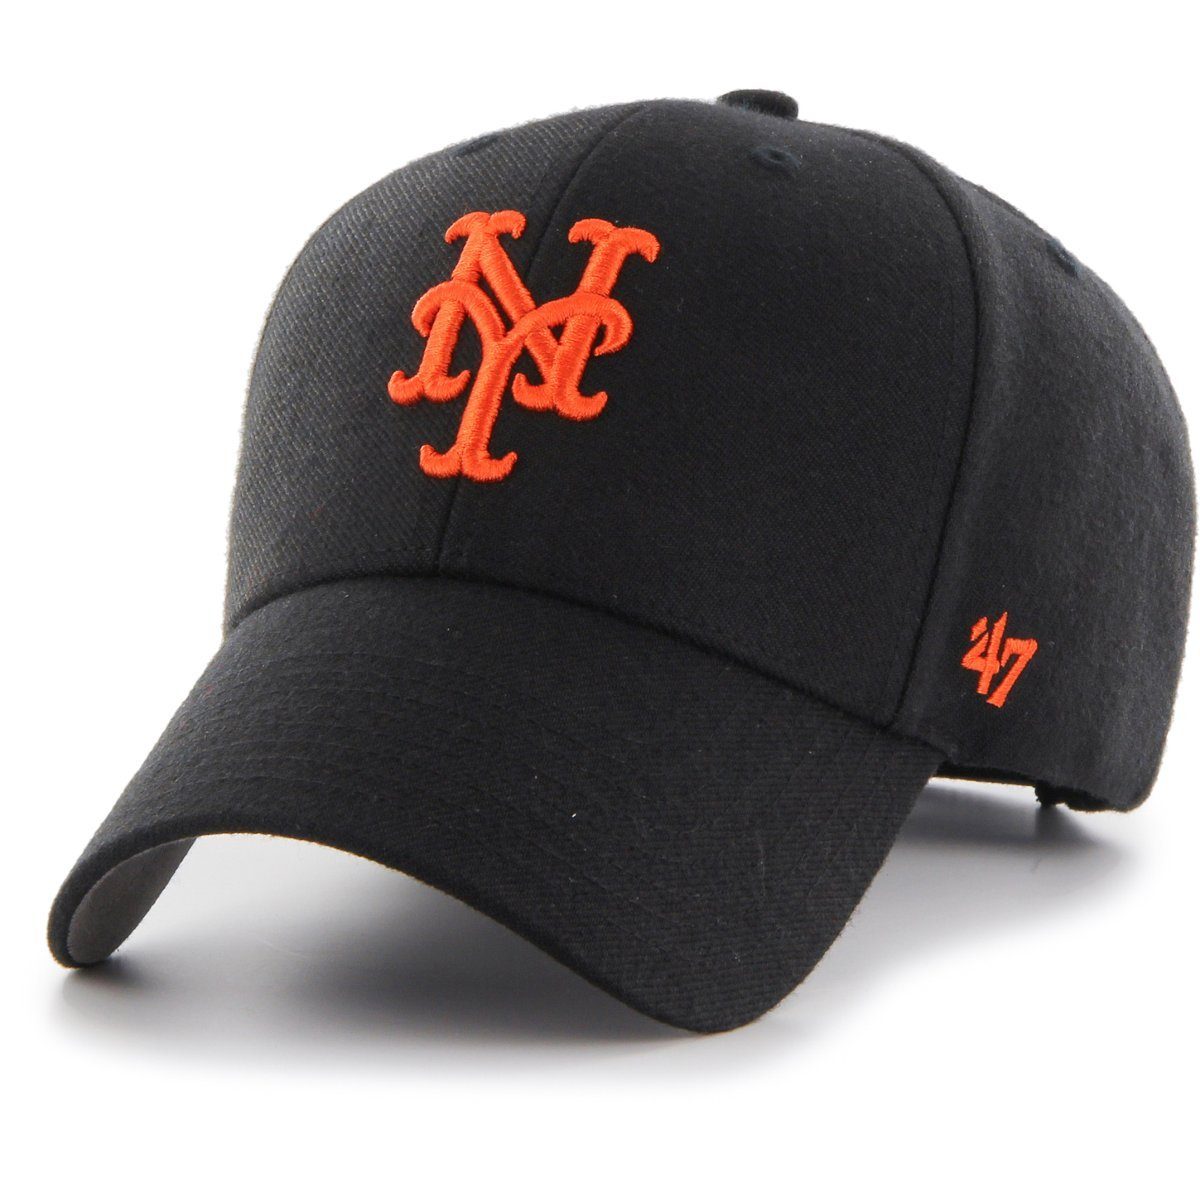 New Cap Brand Fit MLB York '47 Relaxed Trucker Mets